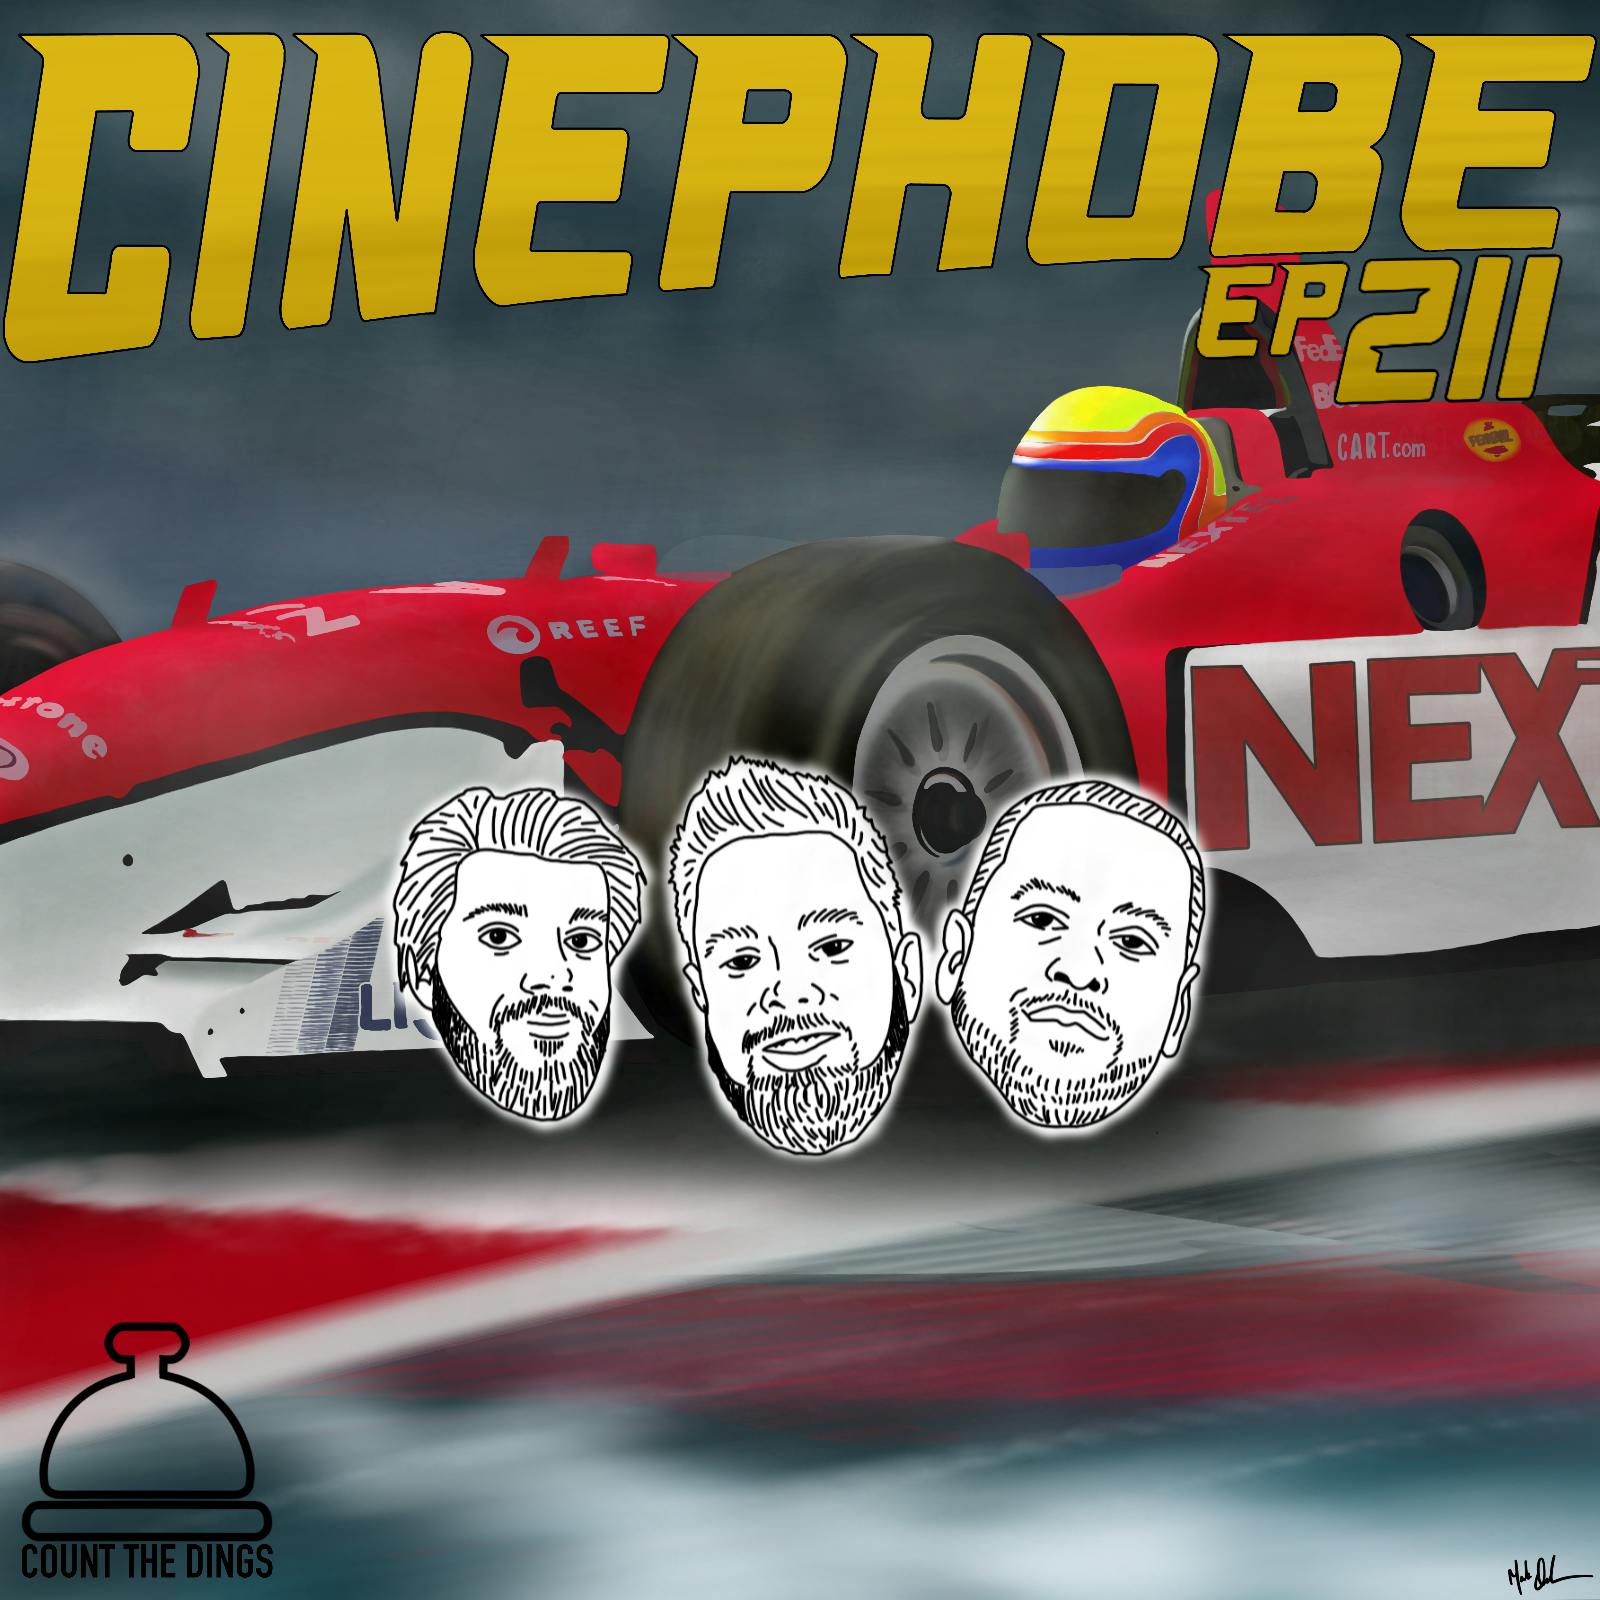 Cinephobe Ep 211: Driven